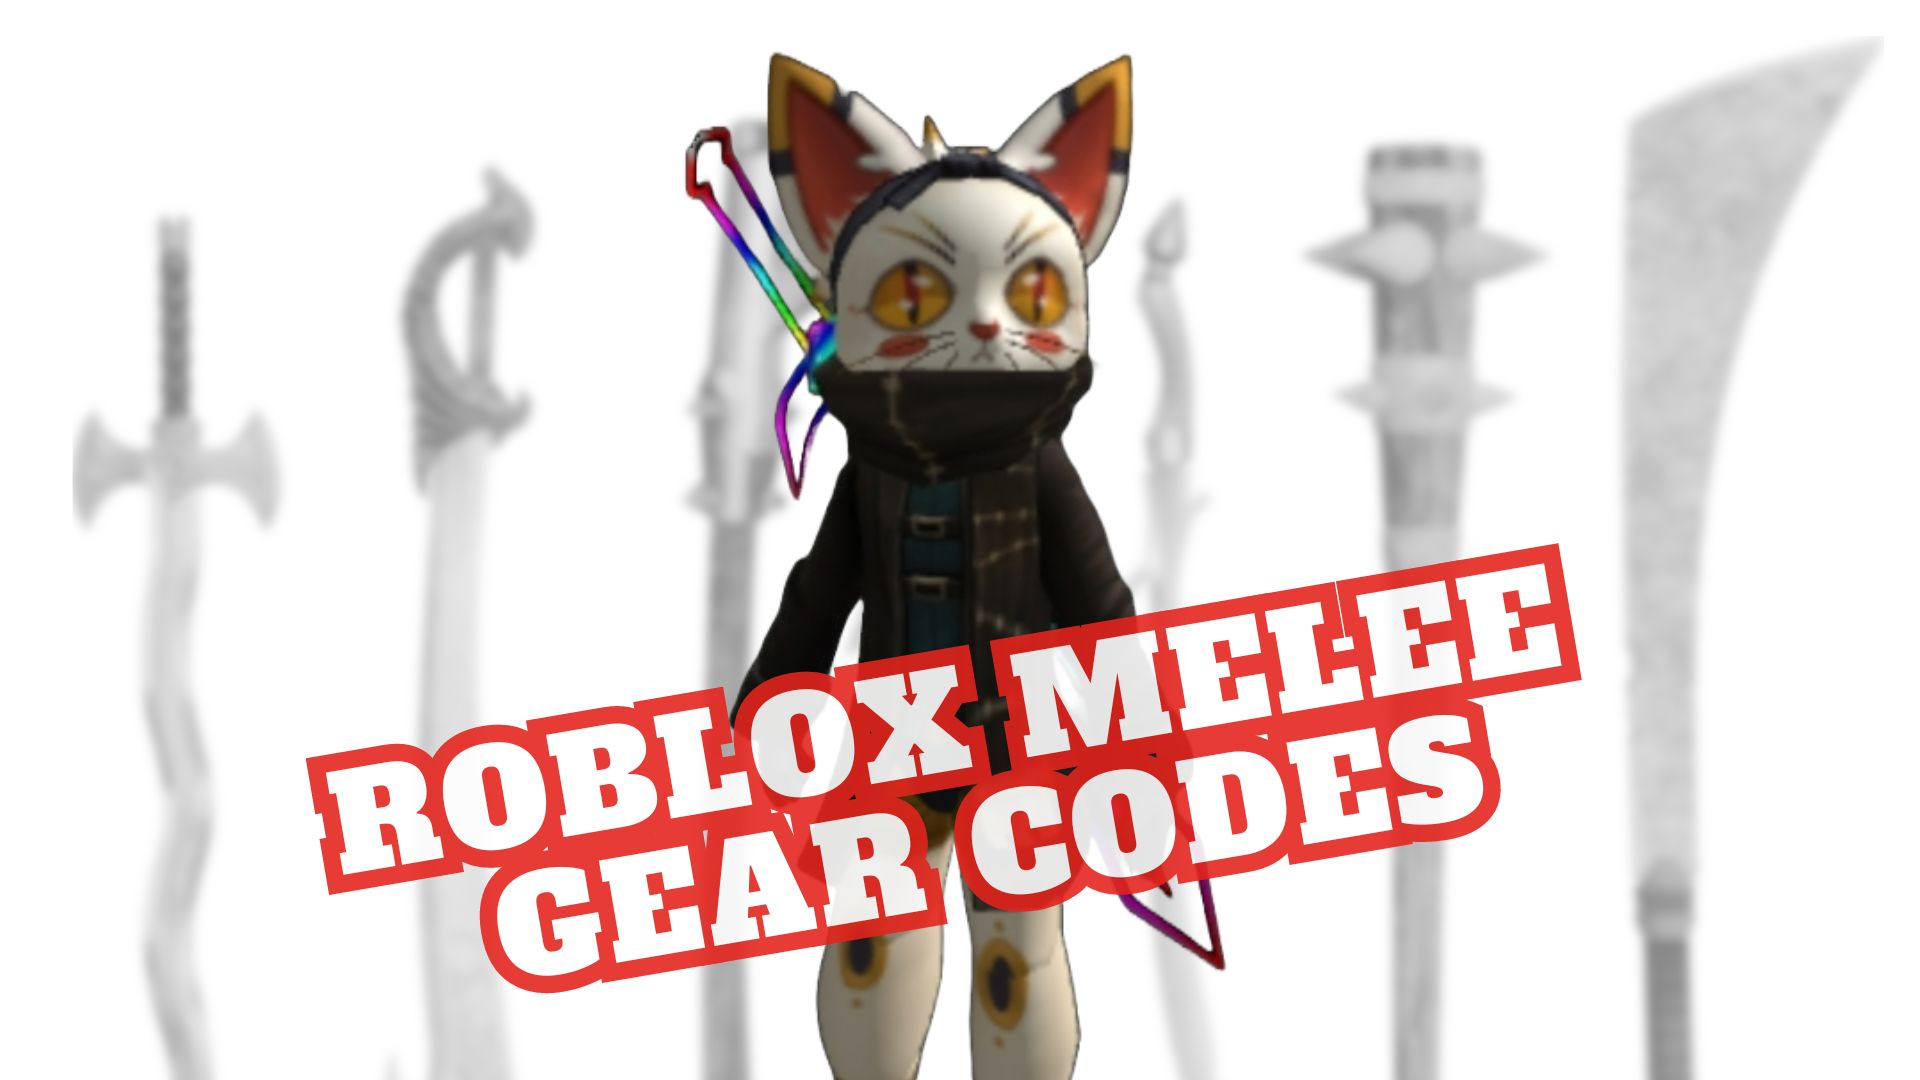 All Roblox Gear ID codes in December 2023: Guns, Swords, Hammers